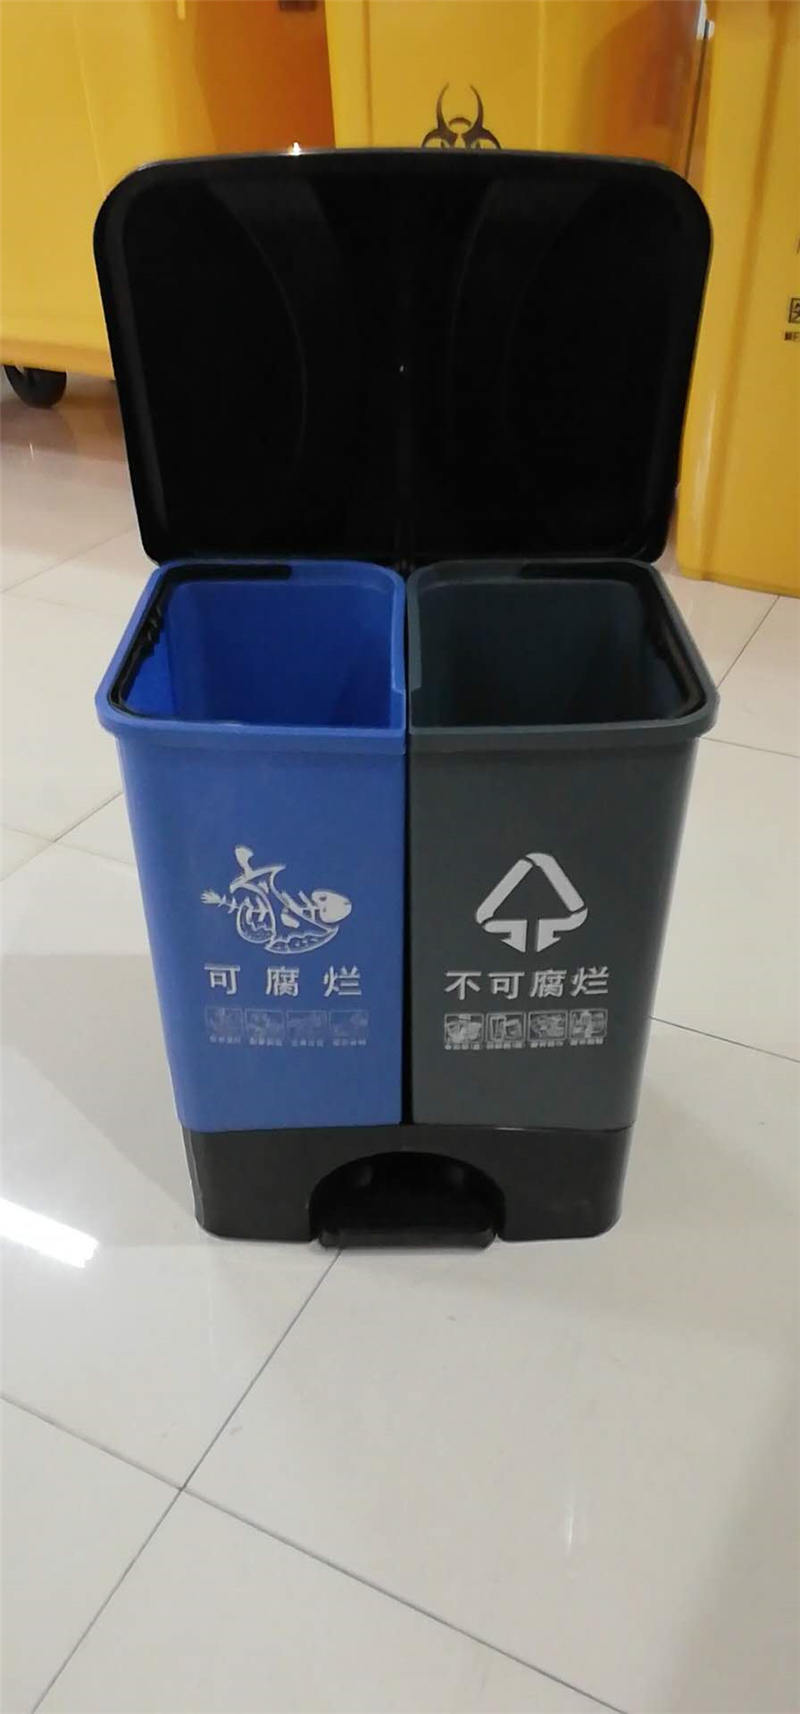 leyu·(中国)官方网站贵州贵阳智能垃圾桶厂家(图2)